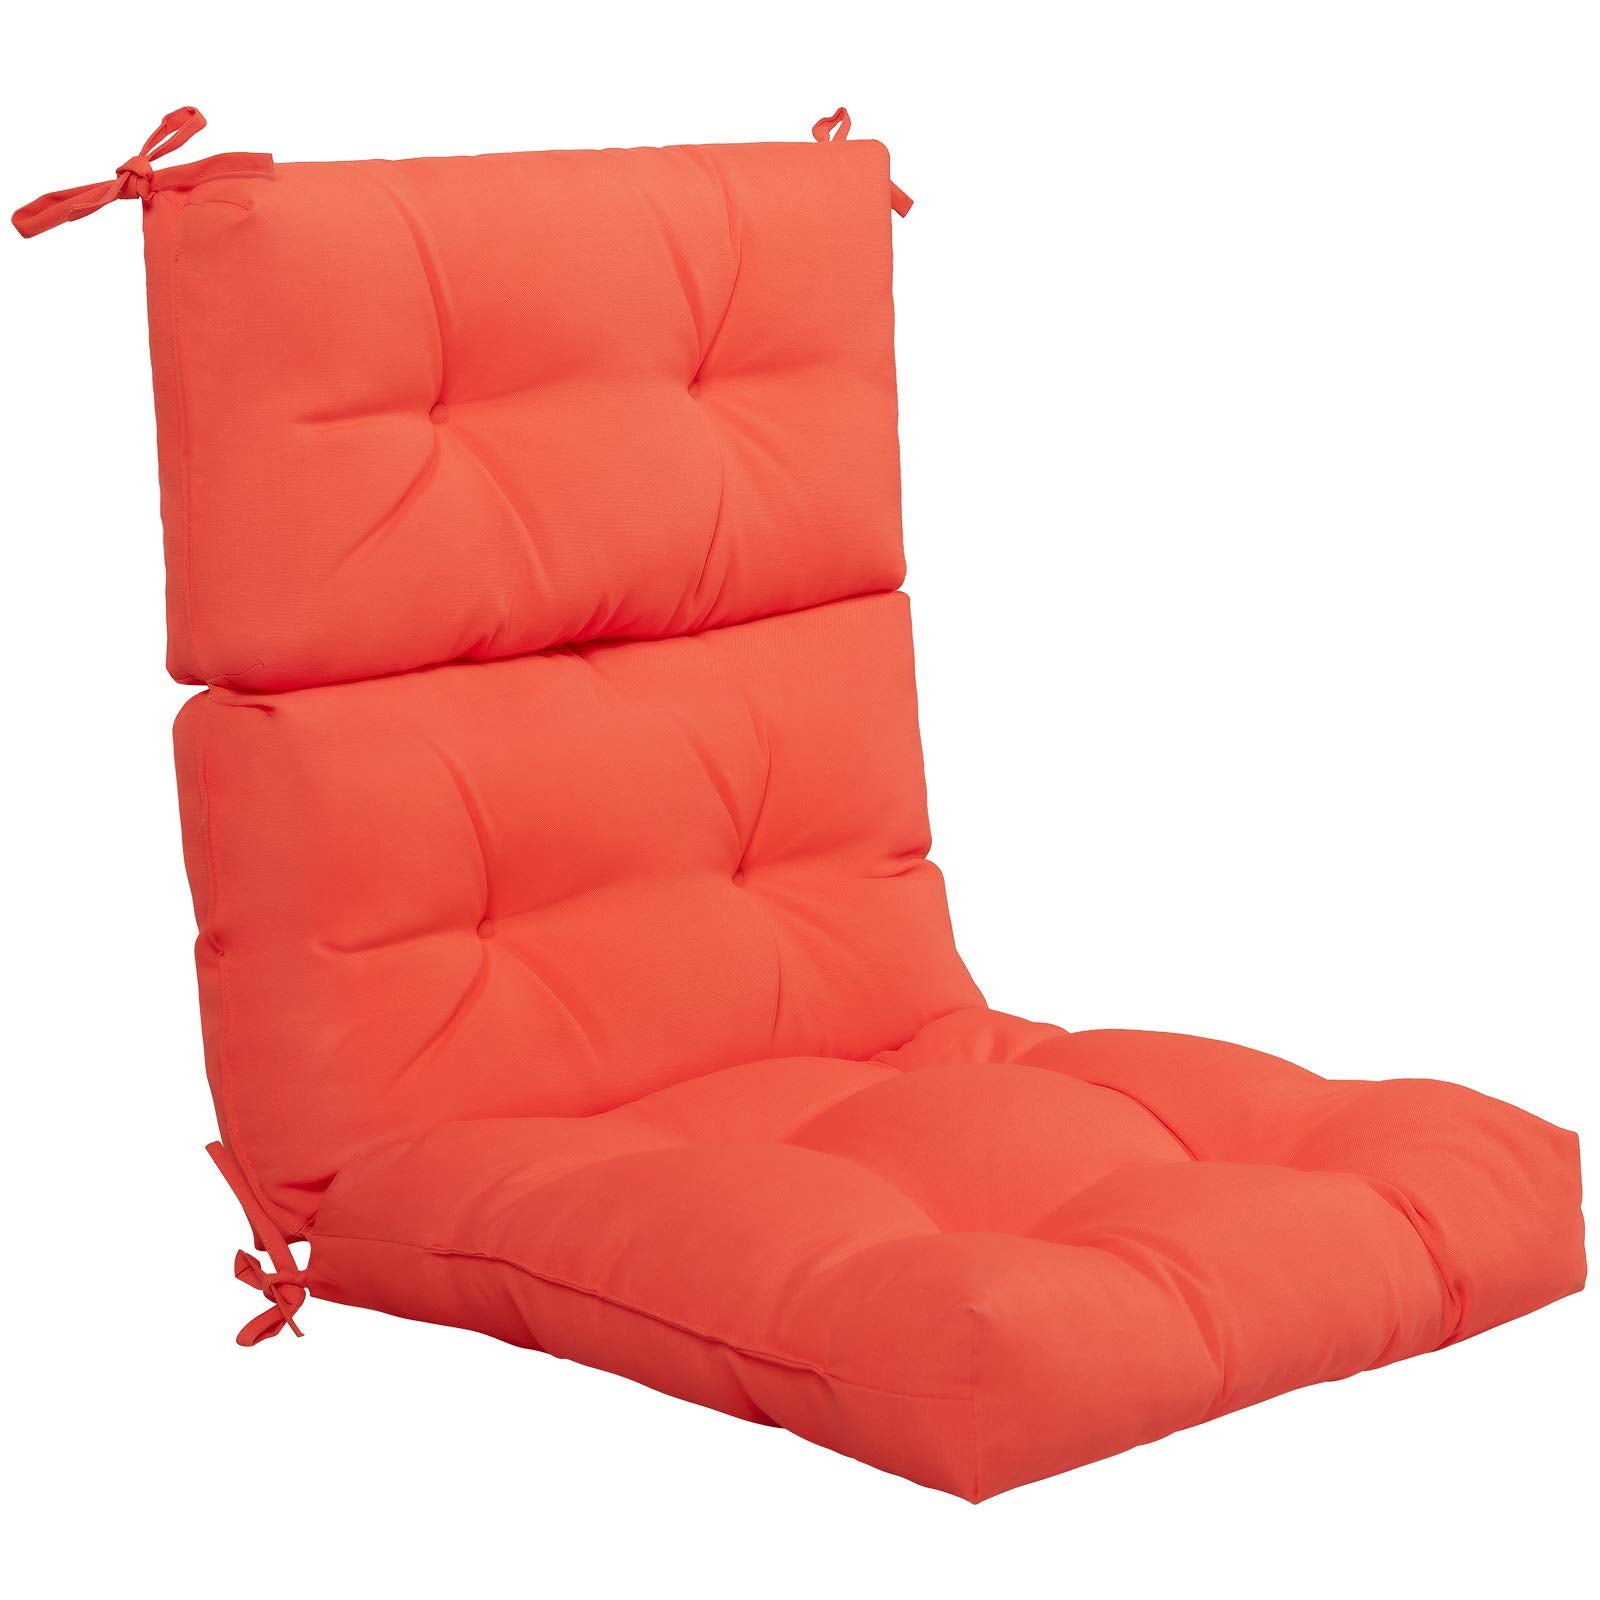 Tufted Outdoor Patio Chair Cushion - Giantex